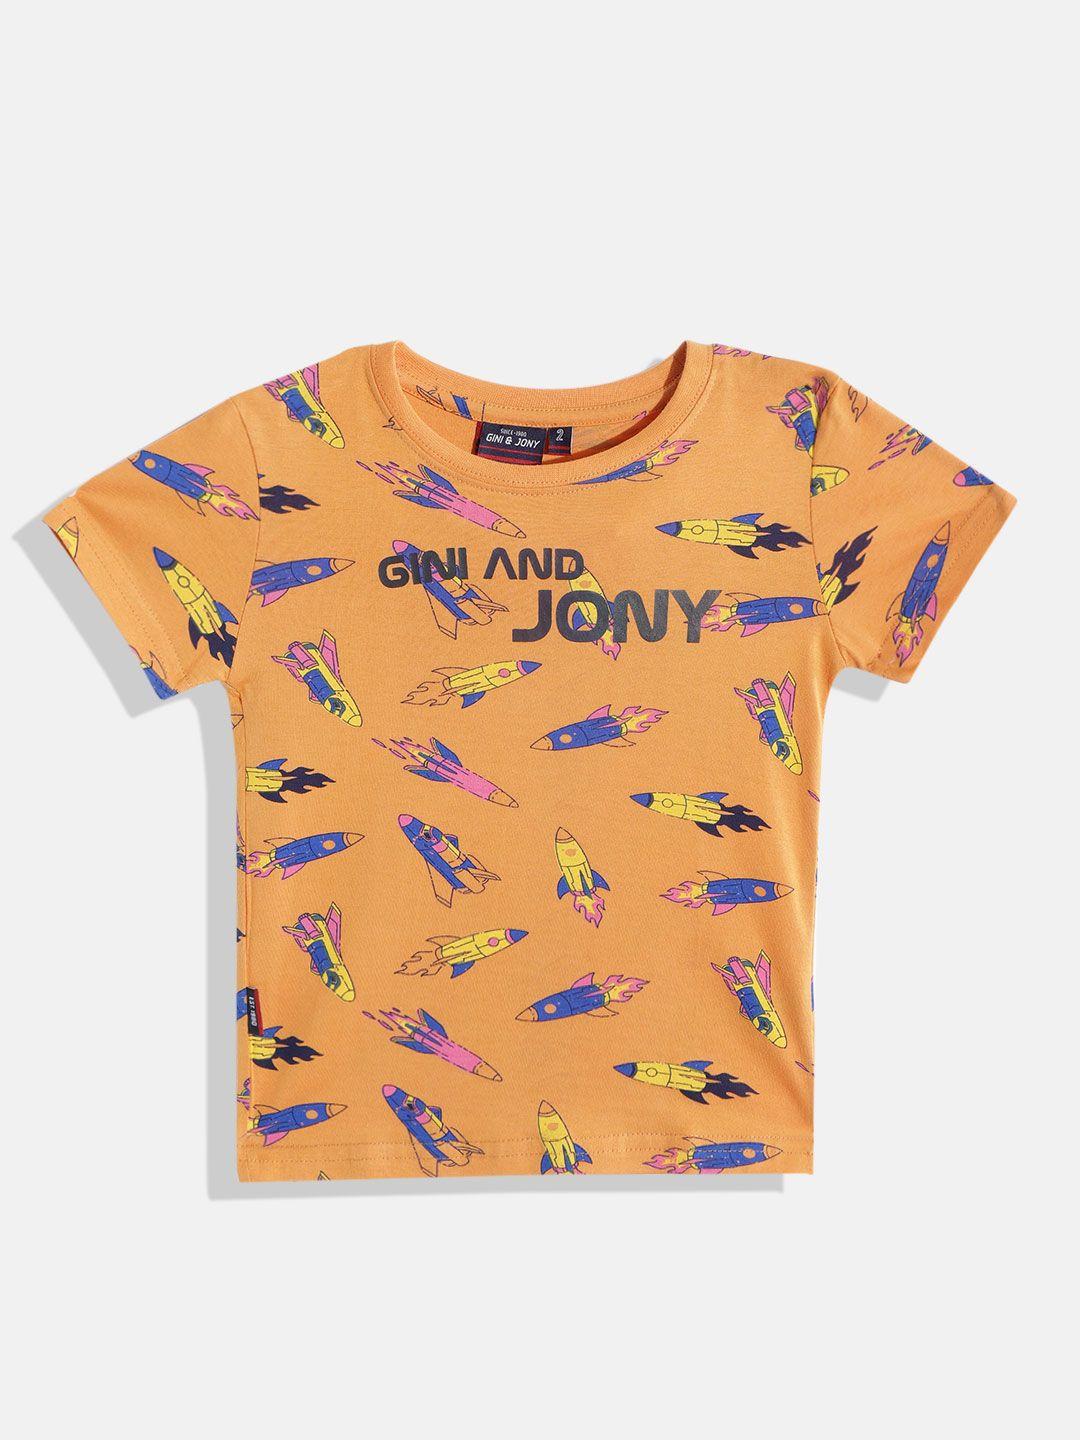 gini and jony boys orange & blue pure cotton brand logo printed t-shirt